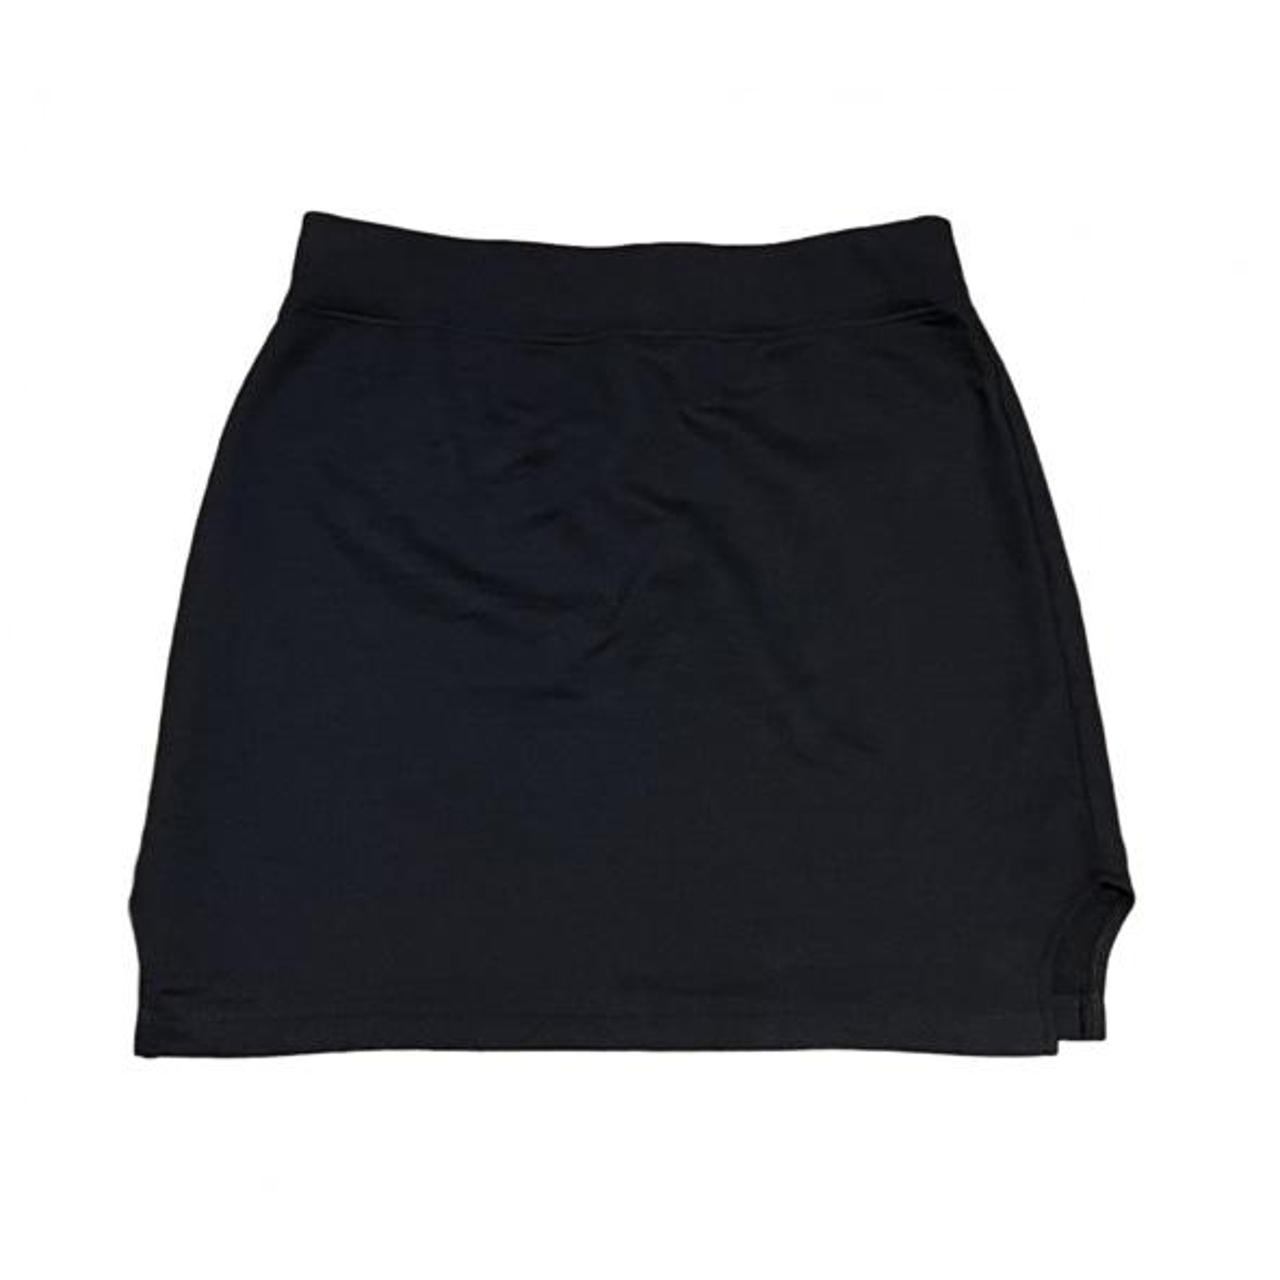 black mini skirt has small slits on the side says... - Depop